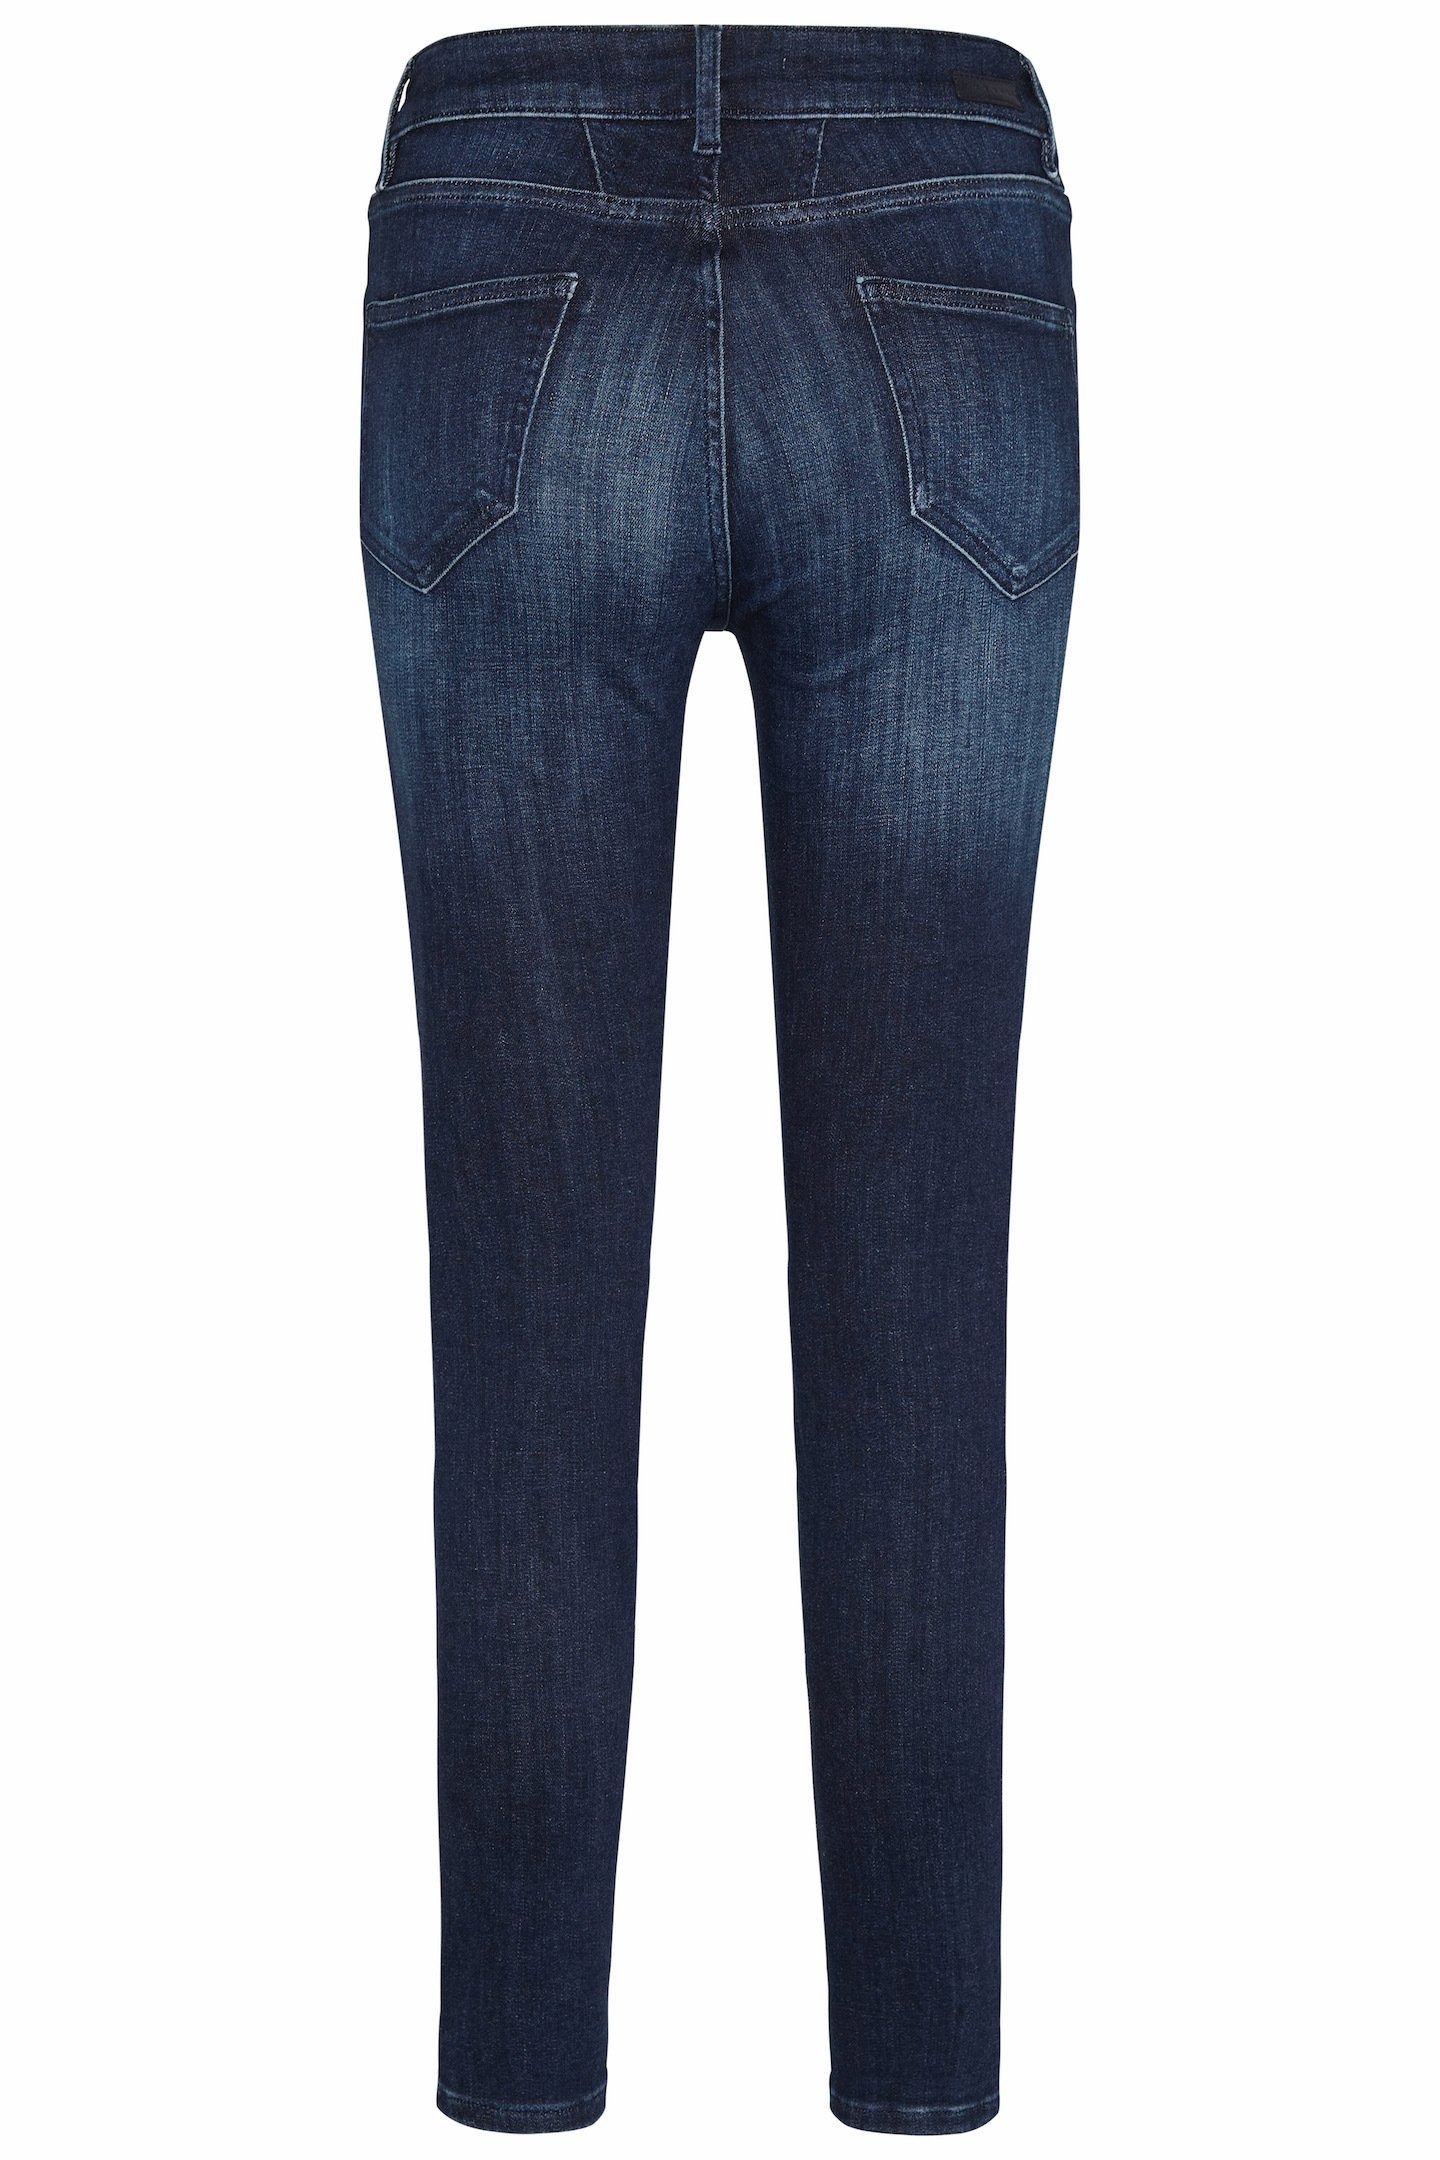 bugatti 5-Pocket-Jeans leichte dunkelblau Used-Waschung